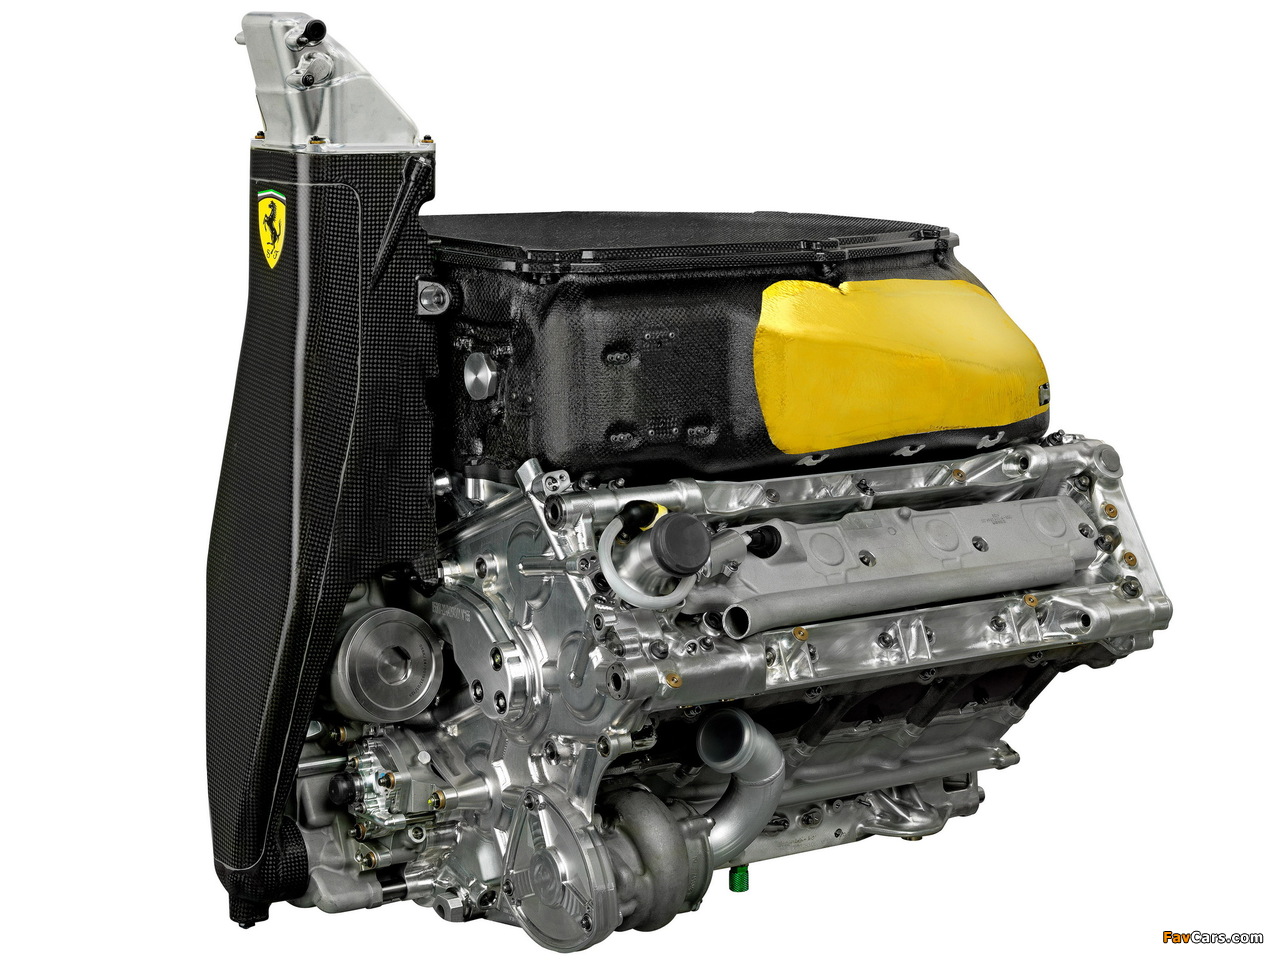 Images of Engines  Ferrari 056 V8 (1280 x 960)